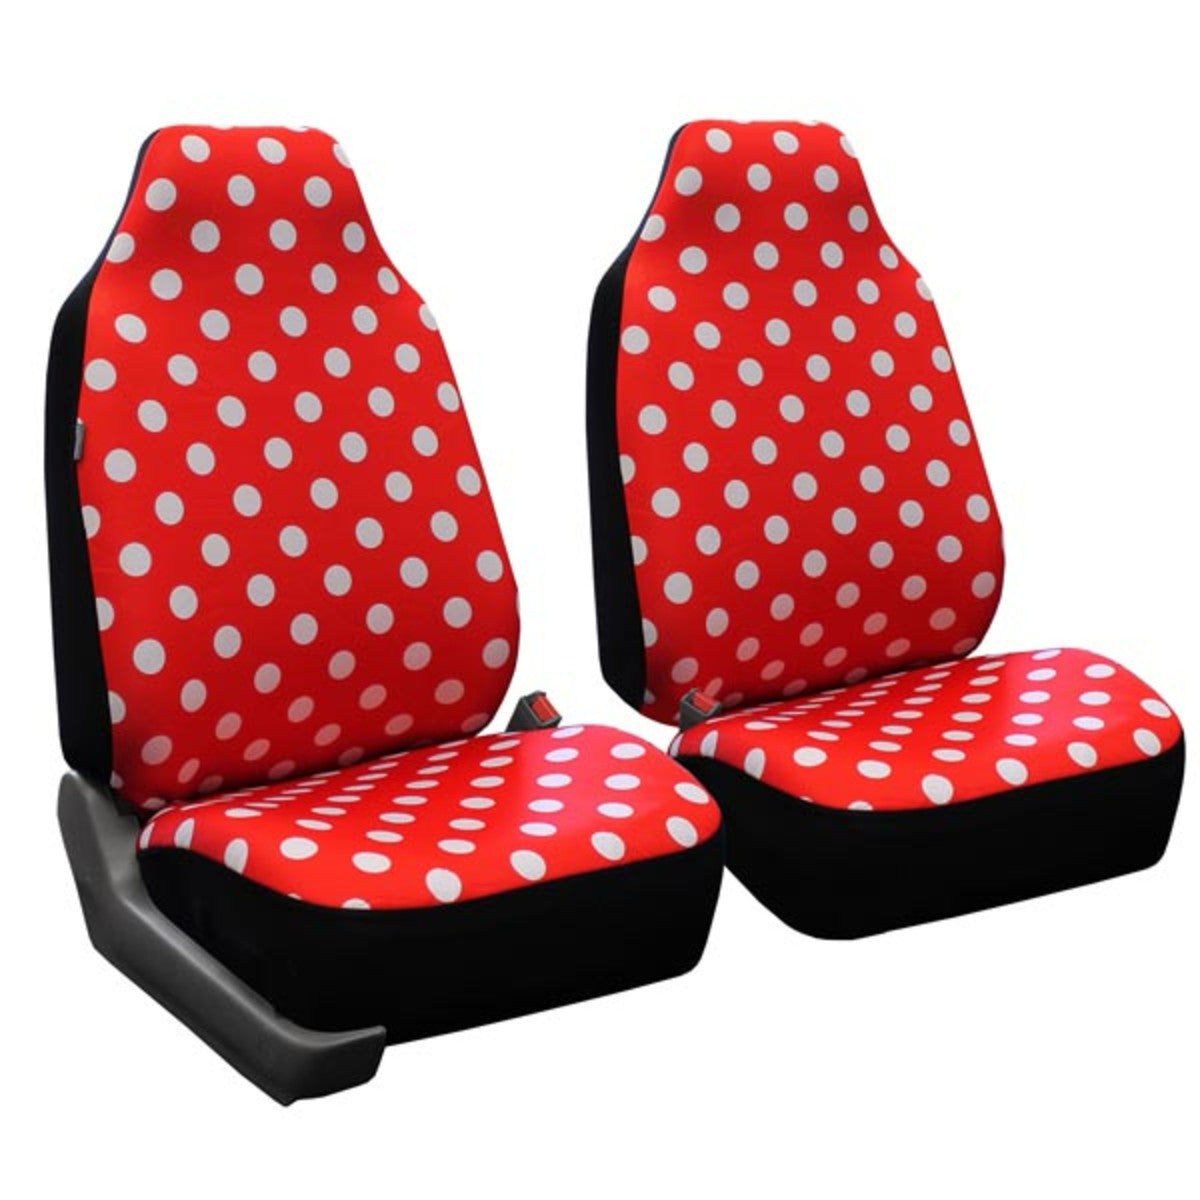 Polka Dot Seat Covers - Full Set Red